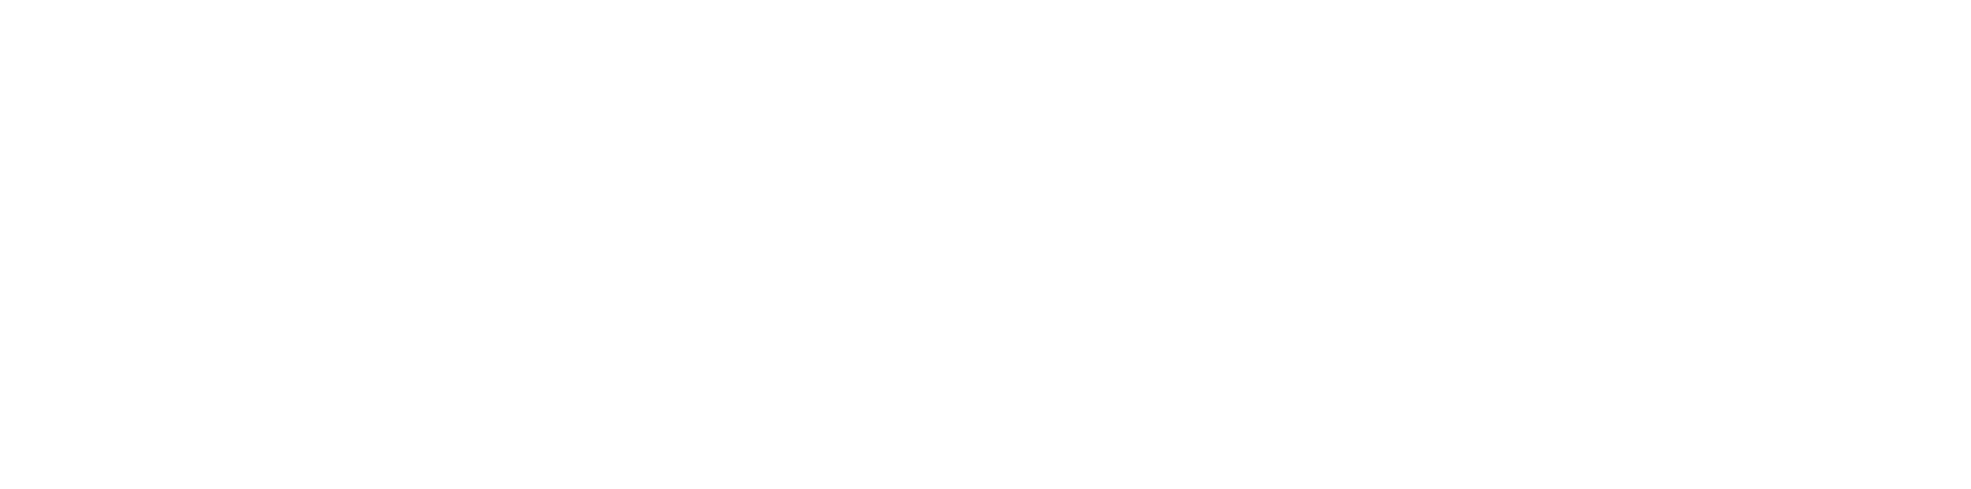 Logo Rentaweb blanco solo